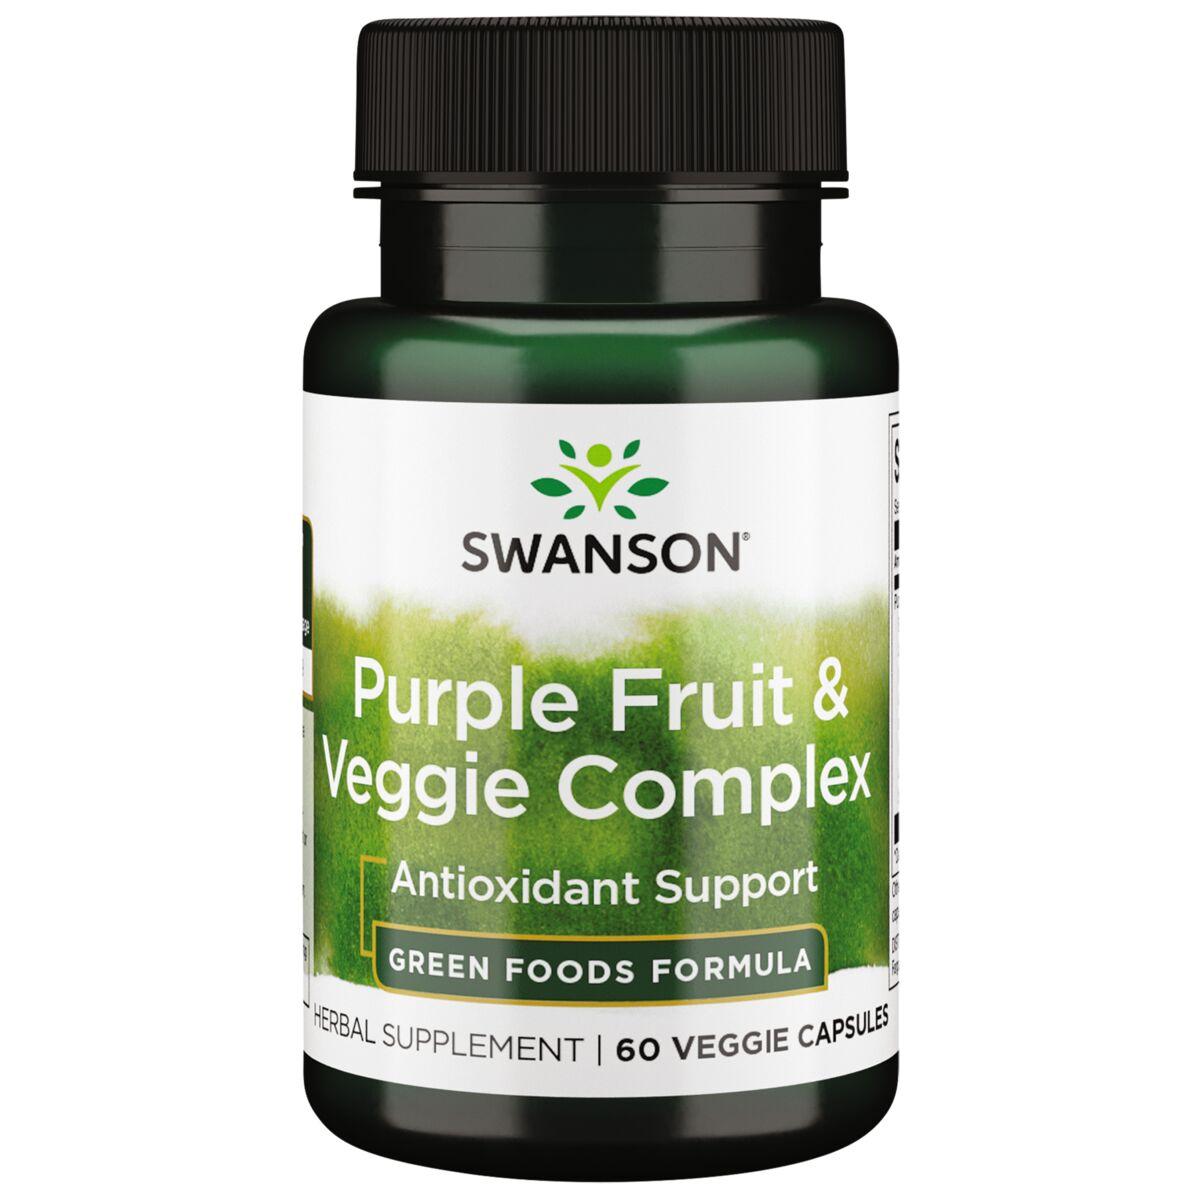 Swanson GreenFoods Formulas Purple Fruit & Veggie Complex Supplement Vitamin | 400 mg | 60 Veg Caps